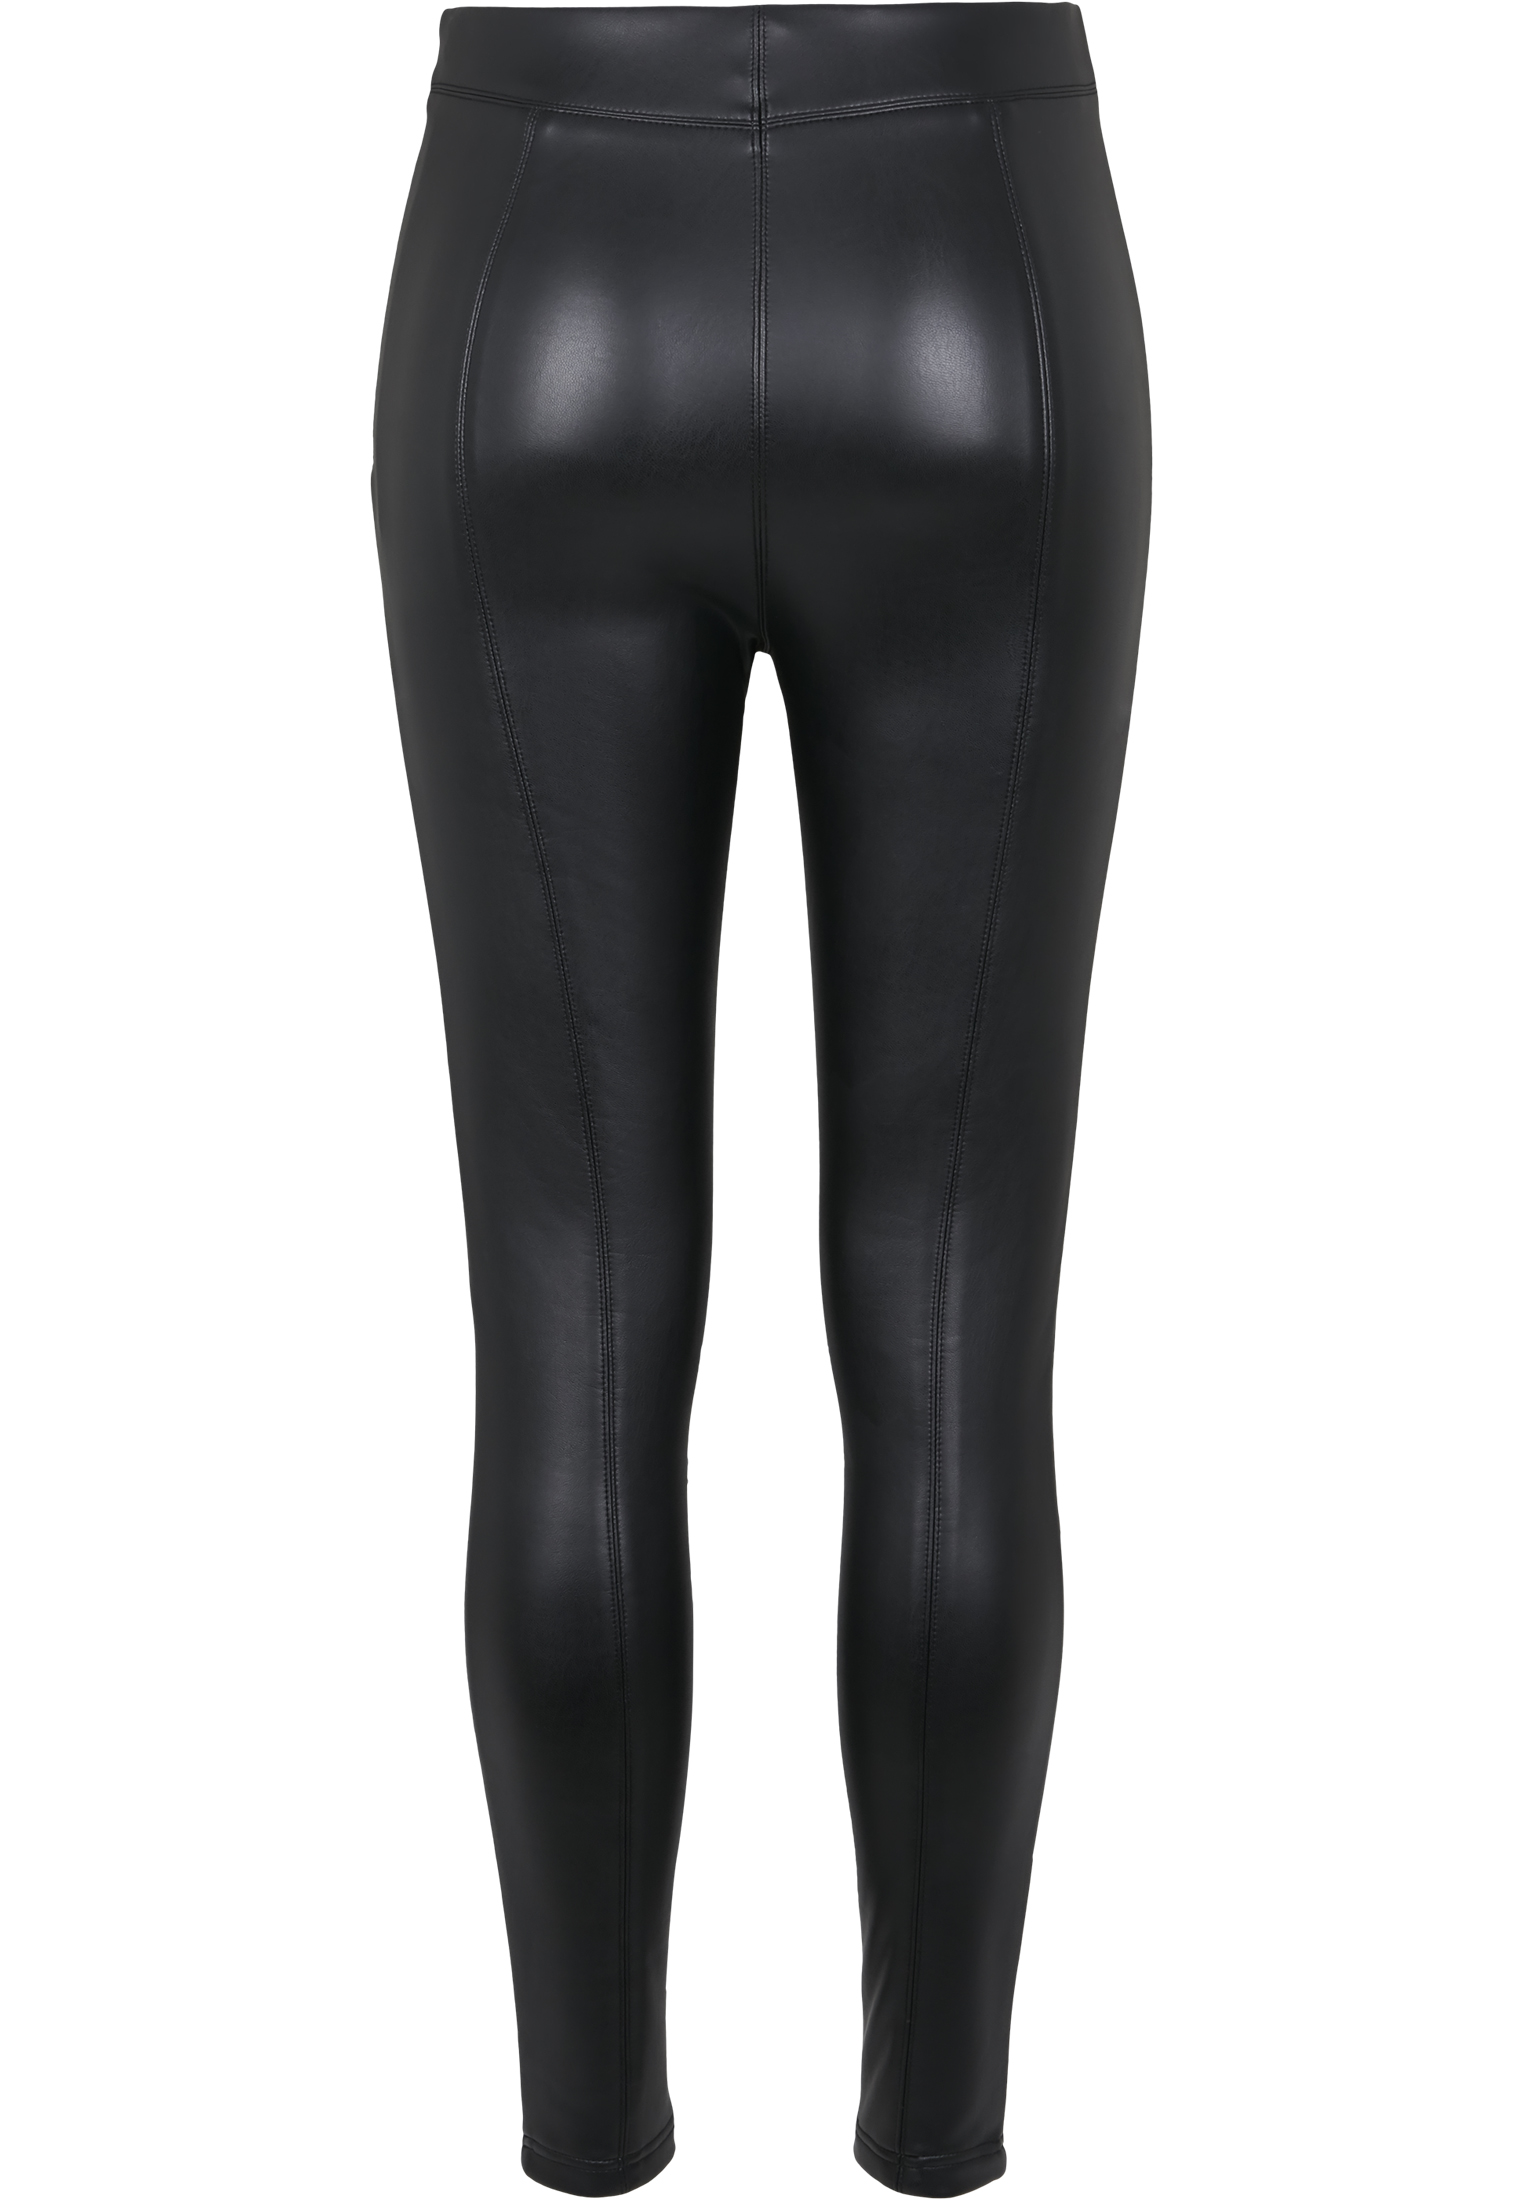 Curvy Ladies Faux Leather Skinny Pants in Farbe black